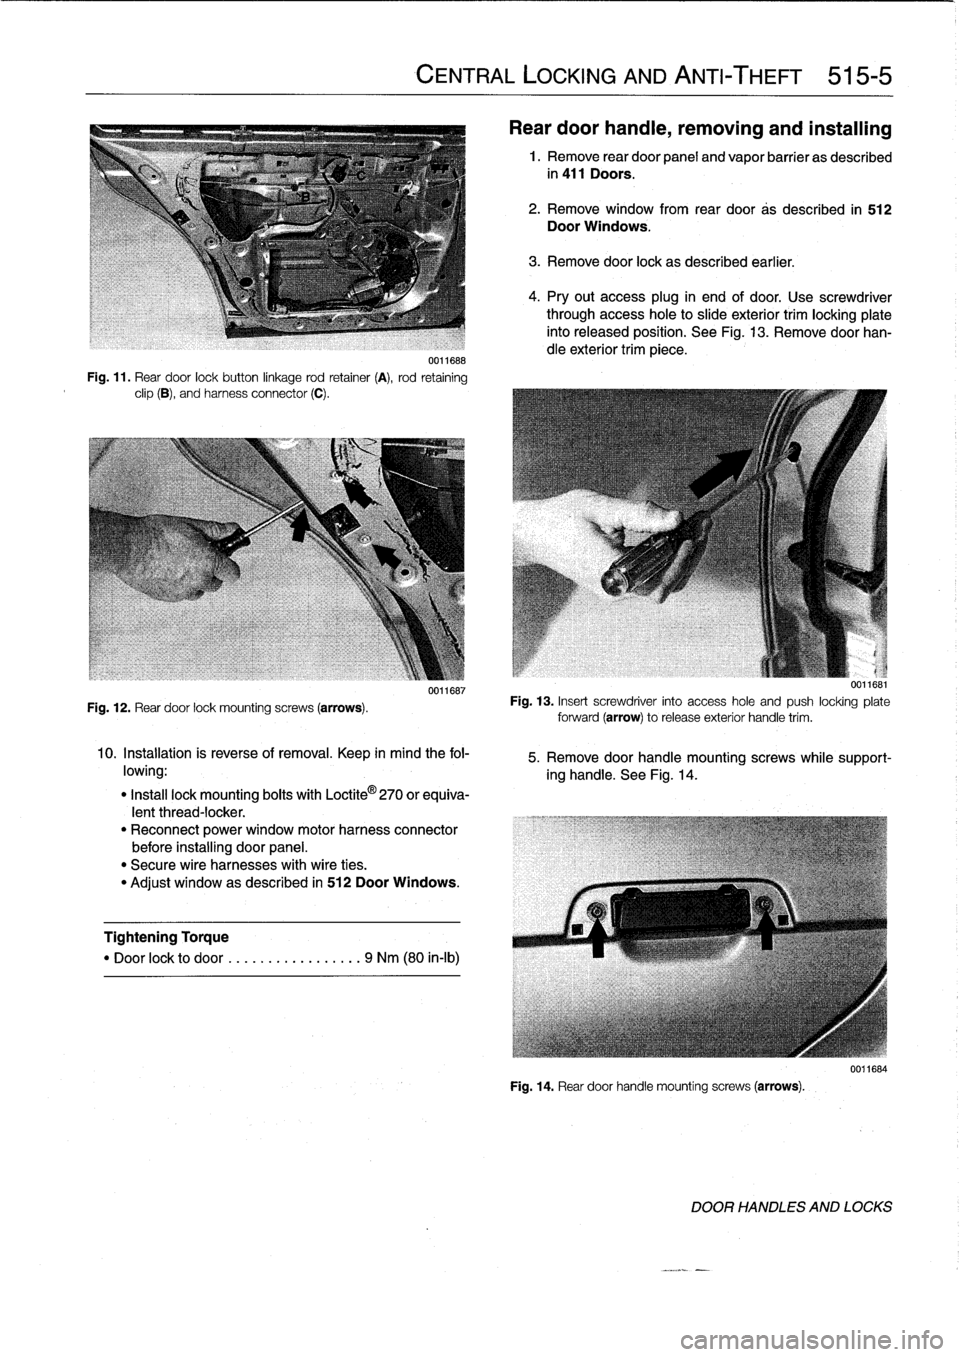 BMW M3 1993 E36 Workshop Manual 
0011688

Fig
.
11
.
Rear
door
lockbutton
linkage
rod
retainer
(A),
rod
retaining
clip
(B),
and
harness
connector
(C)
.

Fig
.
12
.
Rear
door
lock
mounting
screws
(arrows)
.

0011687

10
.
Installatio